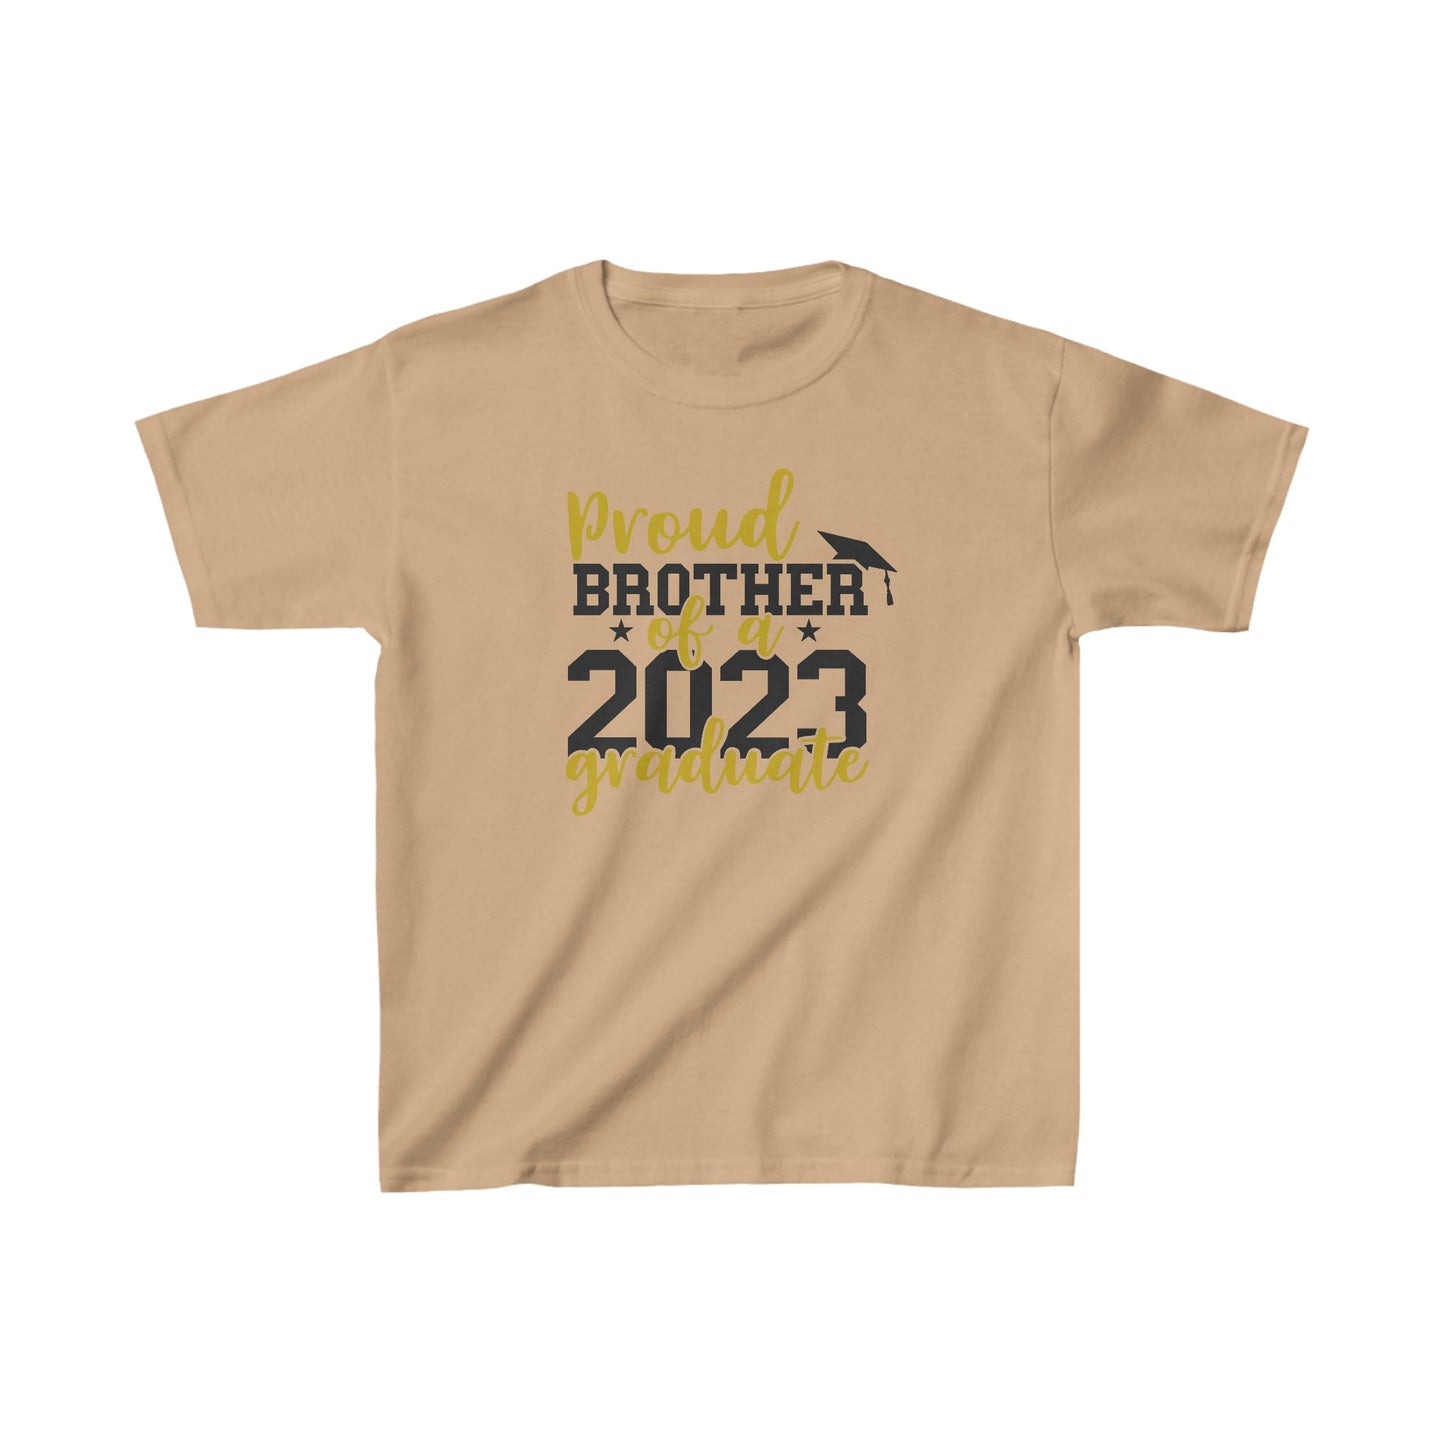 Kids Proud BROTHER of 2023 Graduate Short Sleeve Cotton T-Shirt - numonet